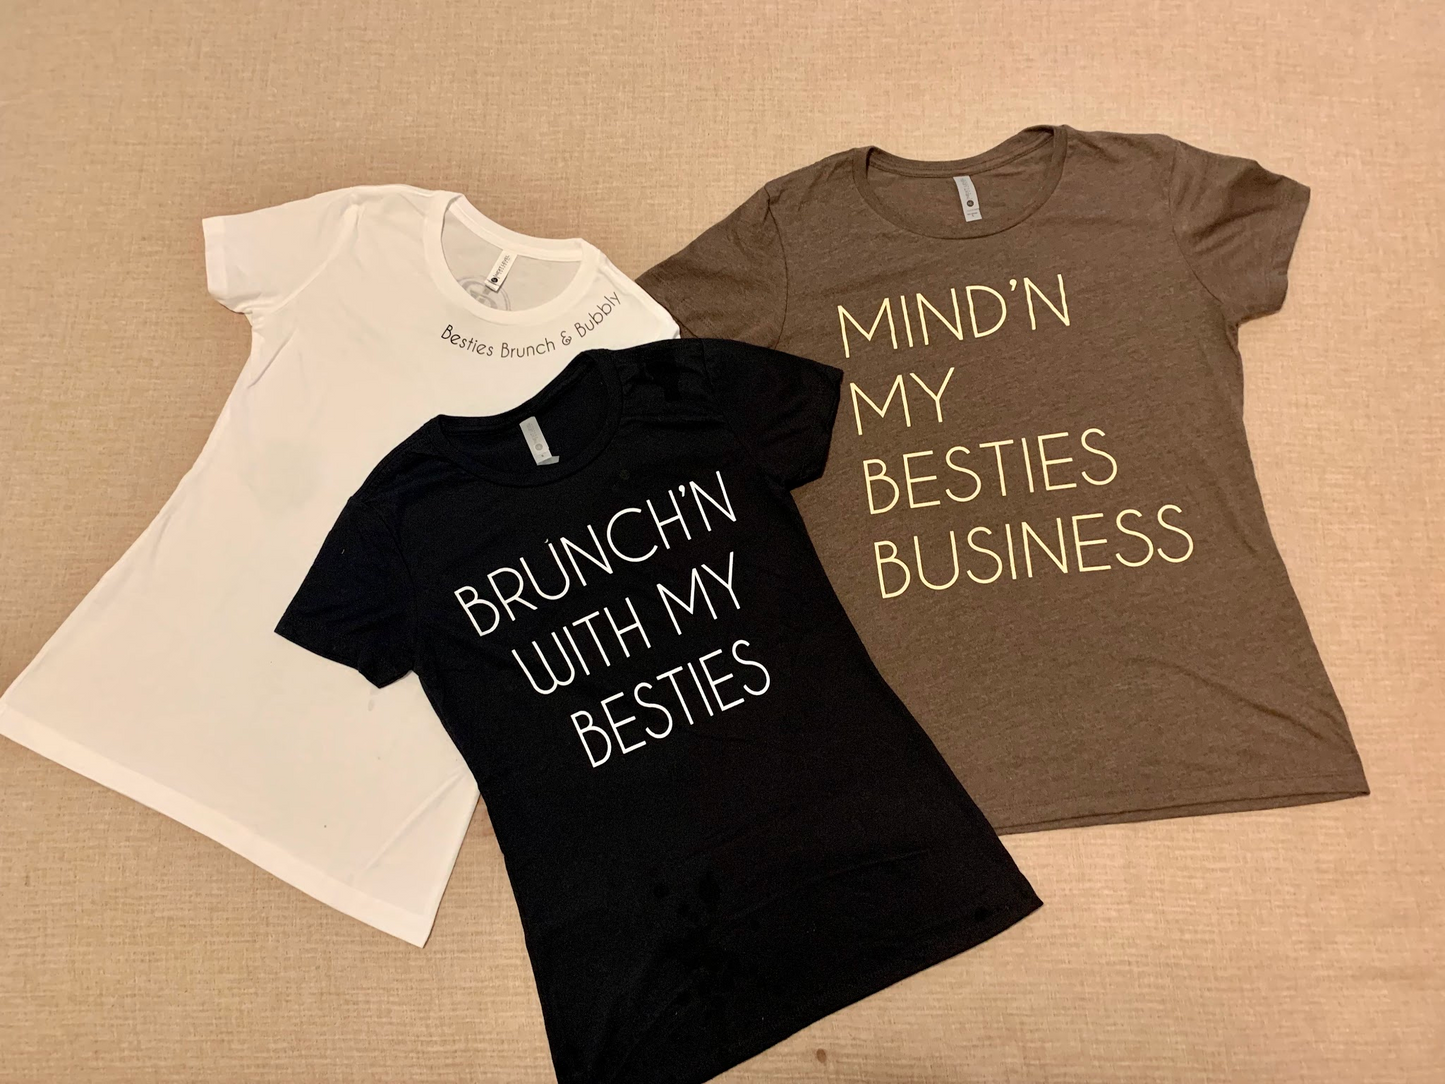 Business Besties Brunch Short Sleeved T-Shirt Black Brunch'n With My Besties